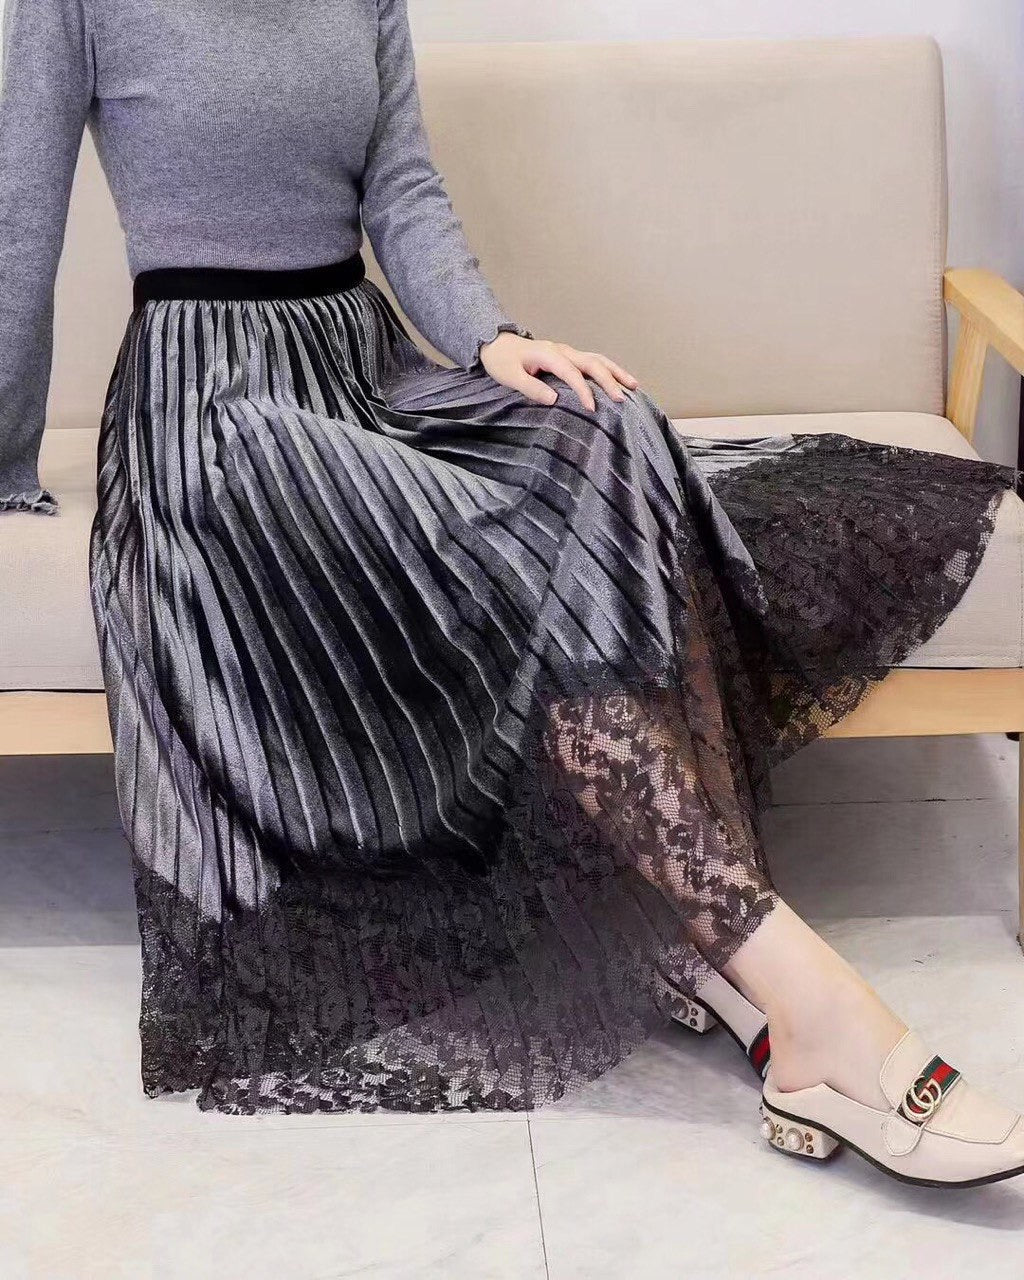 Versatile everyday velvet pleated skirt for street style and smart-casual looks.